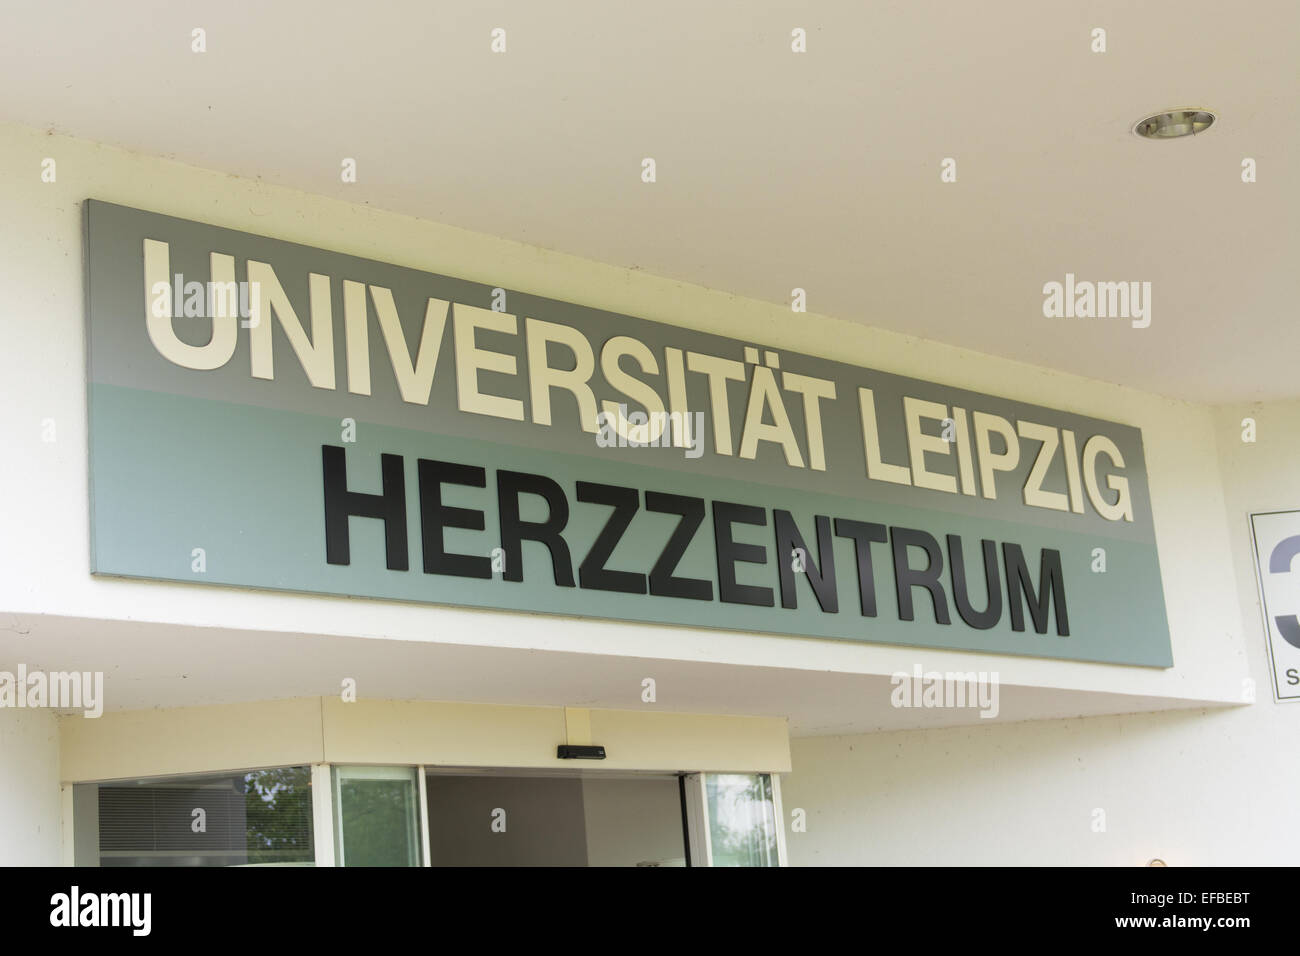 Universität Leipzig Herzzentrum entrance area Stock Photo